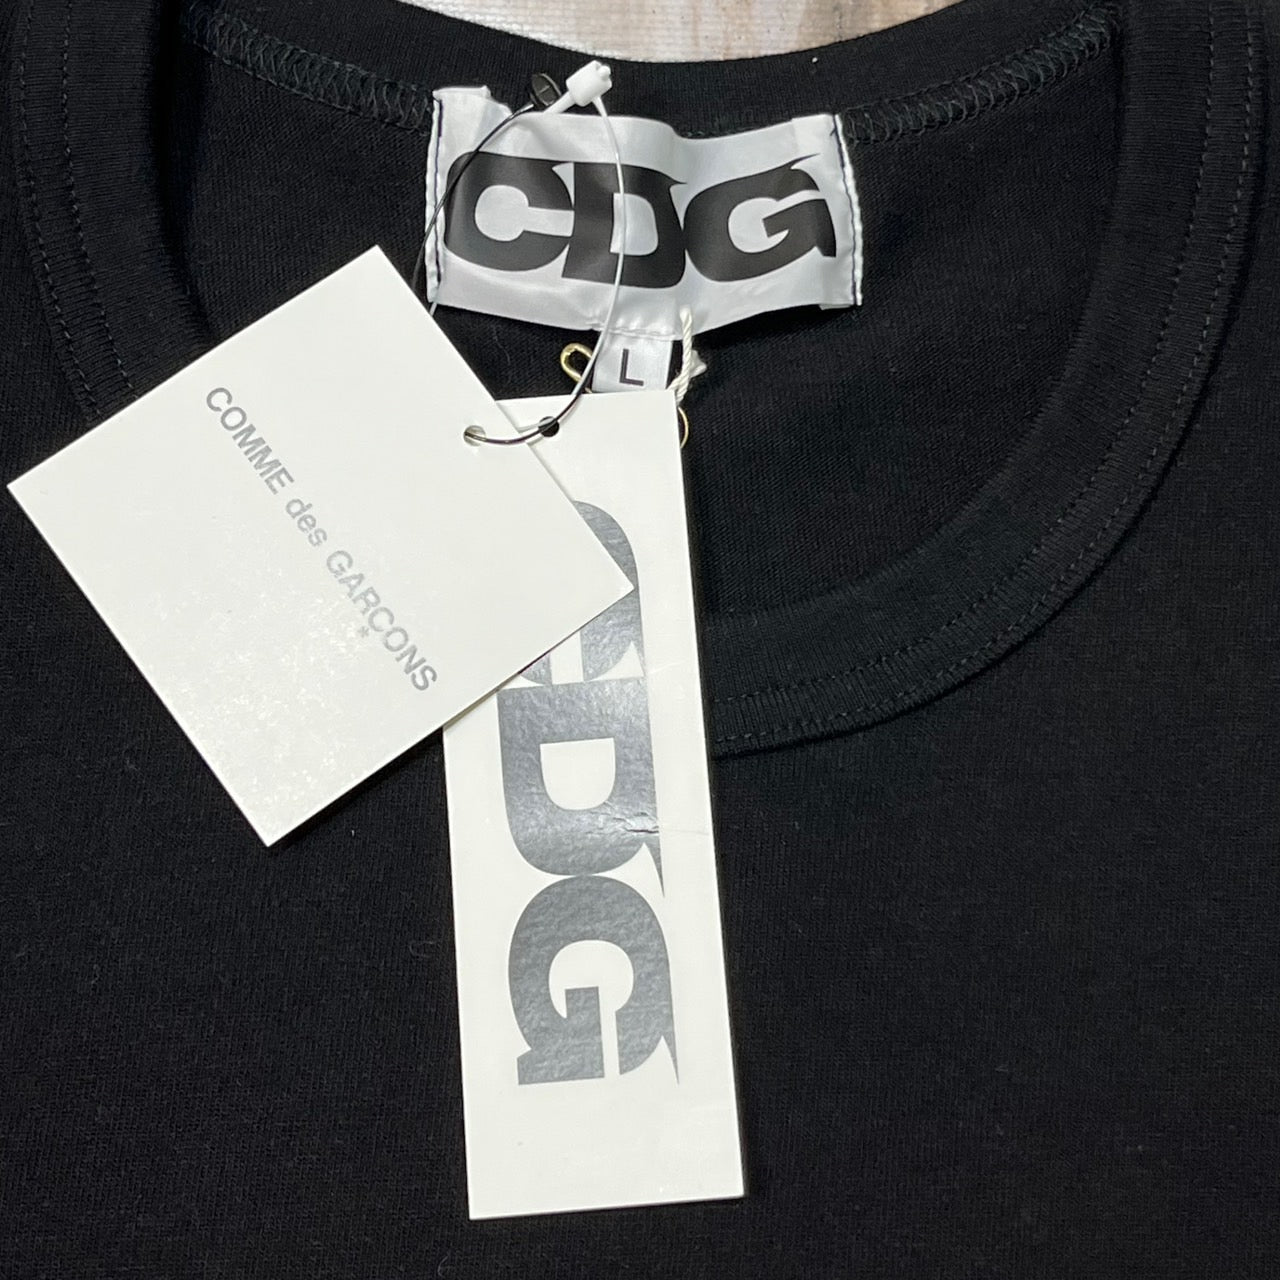 CDG COMME des GARCONS(シーディージーコムデギャルソン) LOGO TEE/ロゴTシャツ SZ-T019 SIZE L ブラック×ピンク タグ付